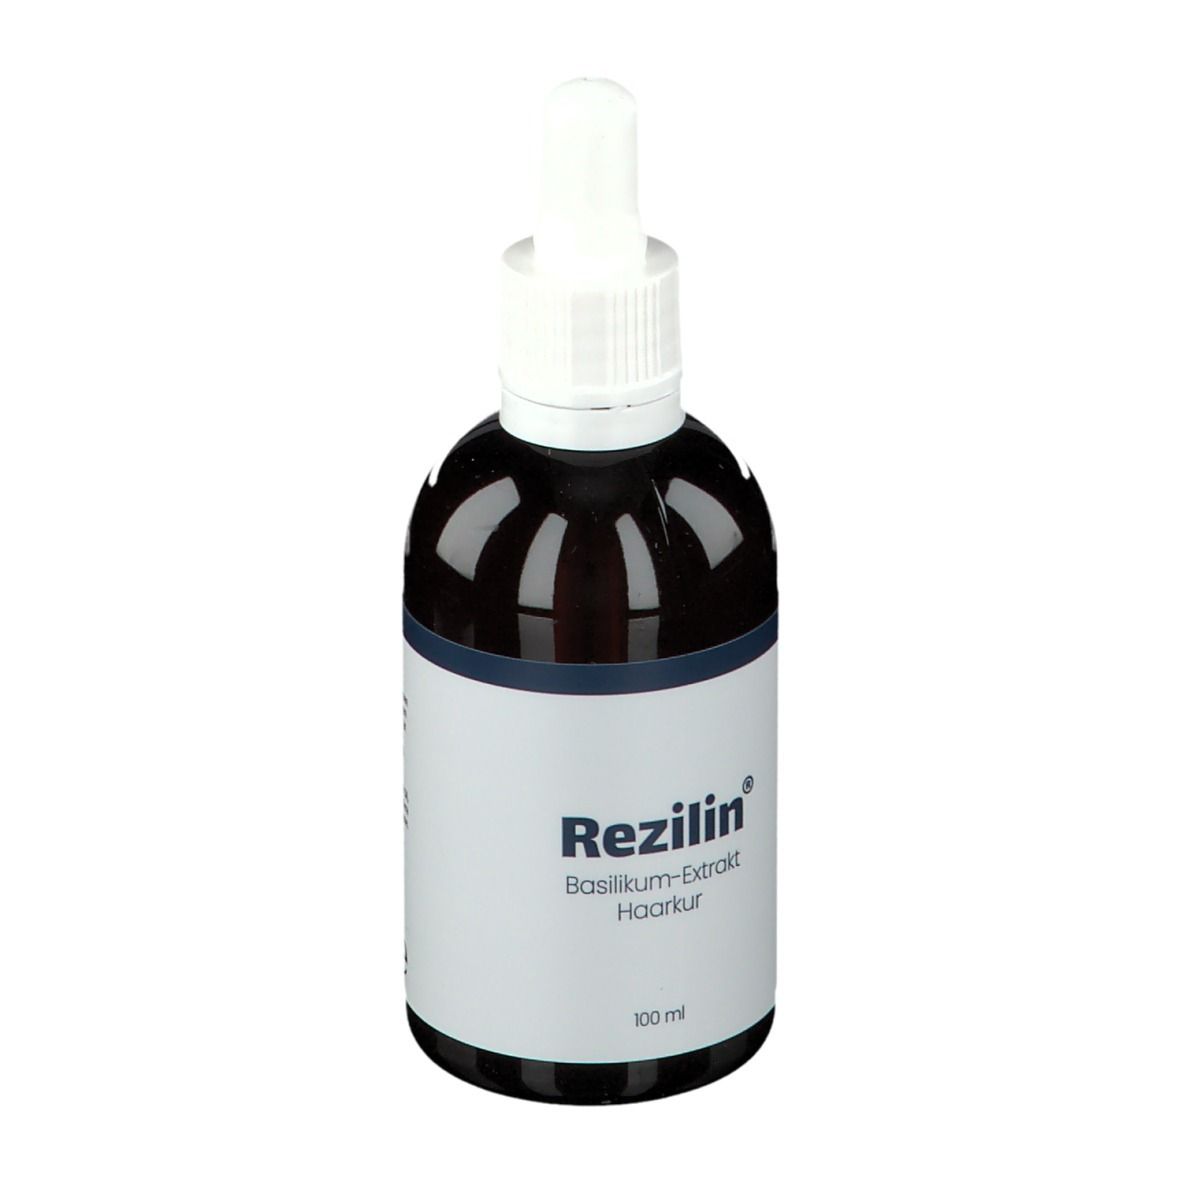 Rezilin® Basilikum-Extrakt